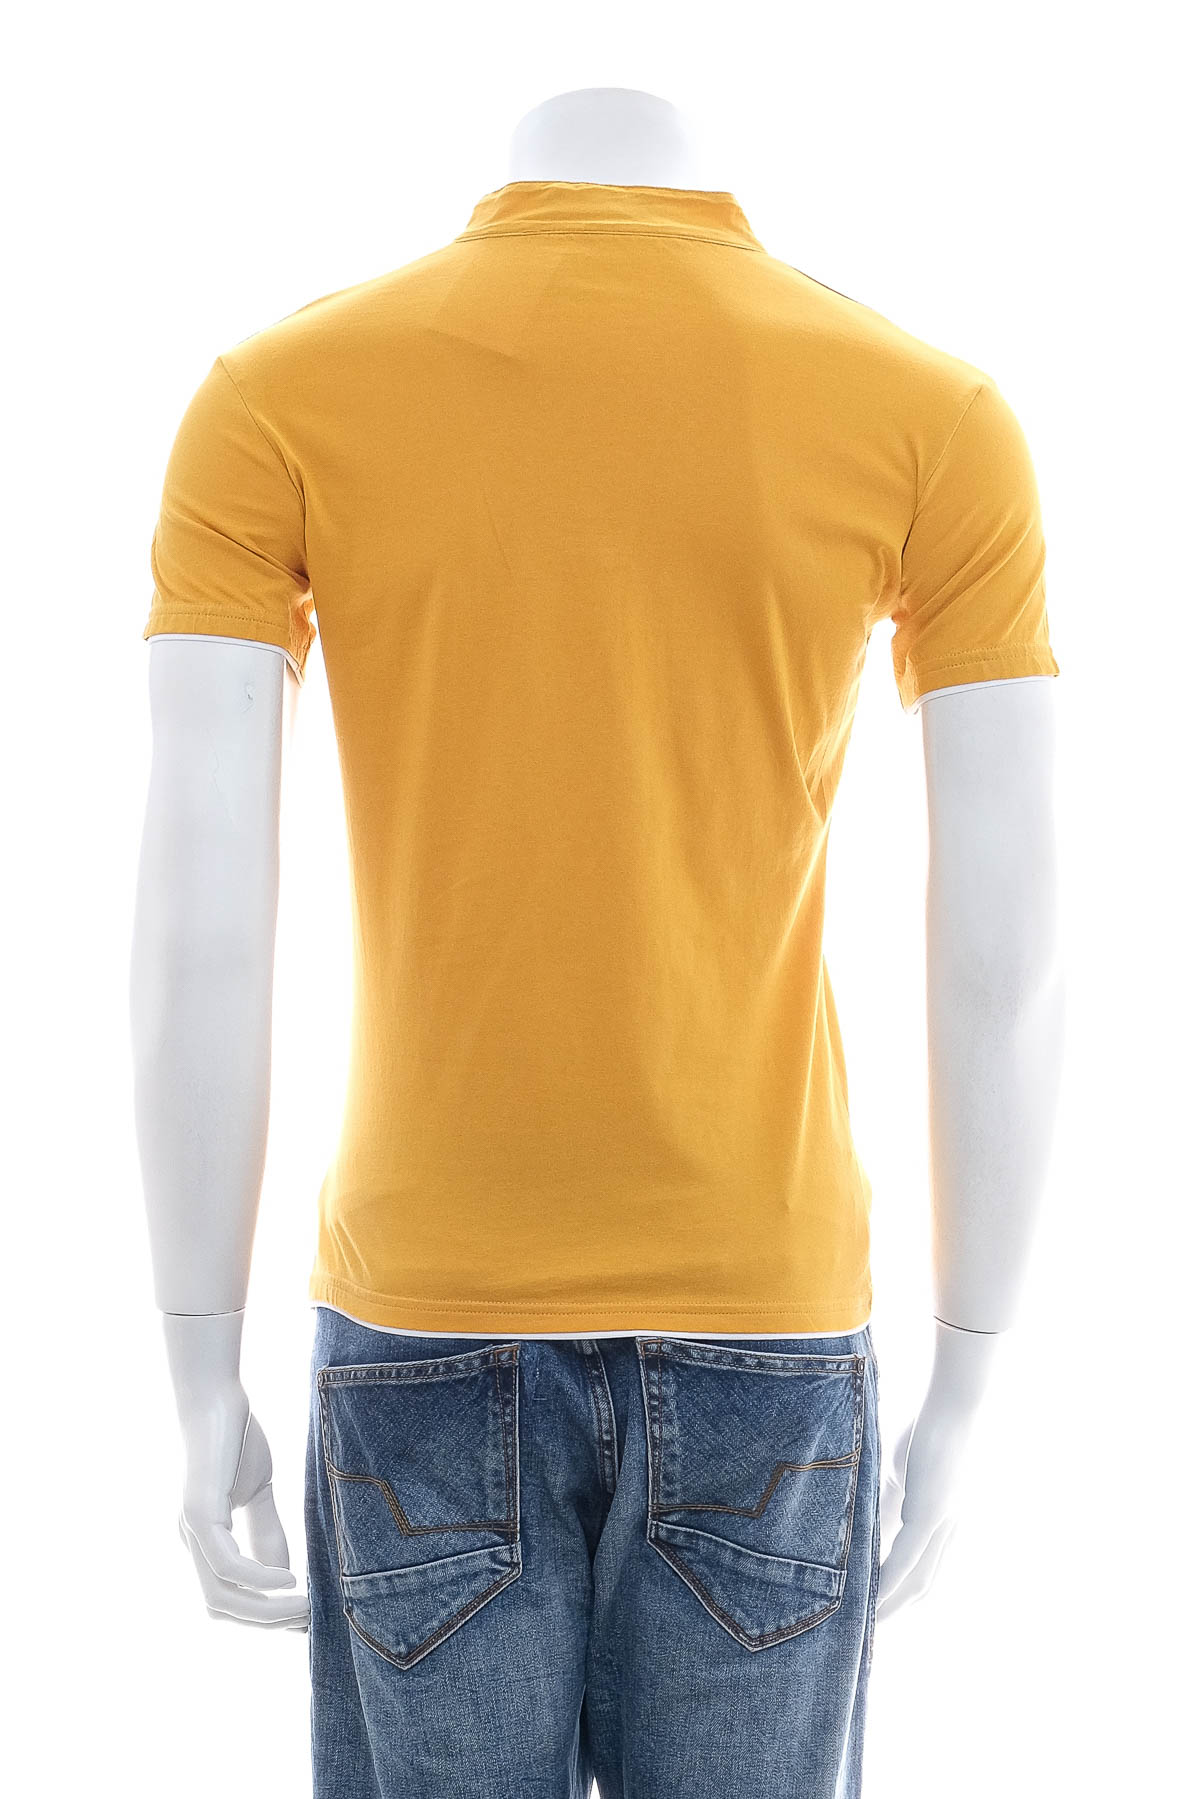 Men's T-shirt - Fashion - 1